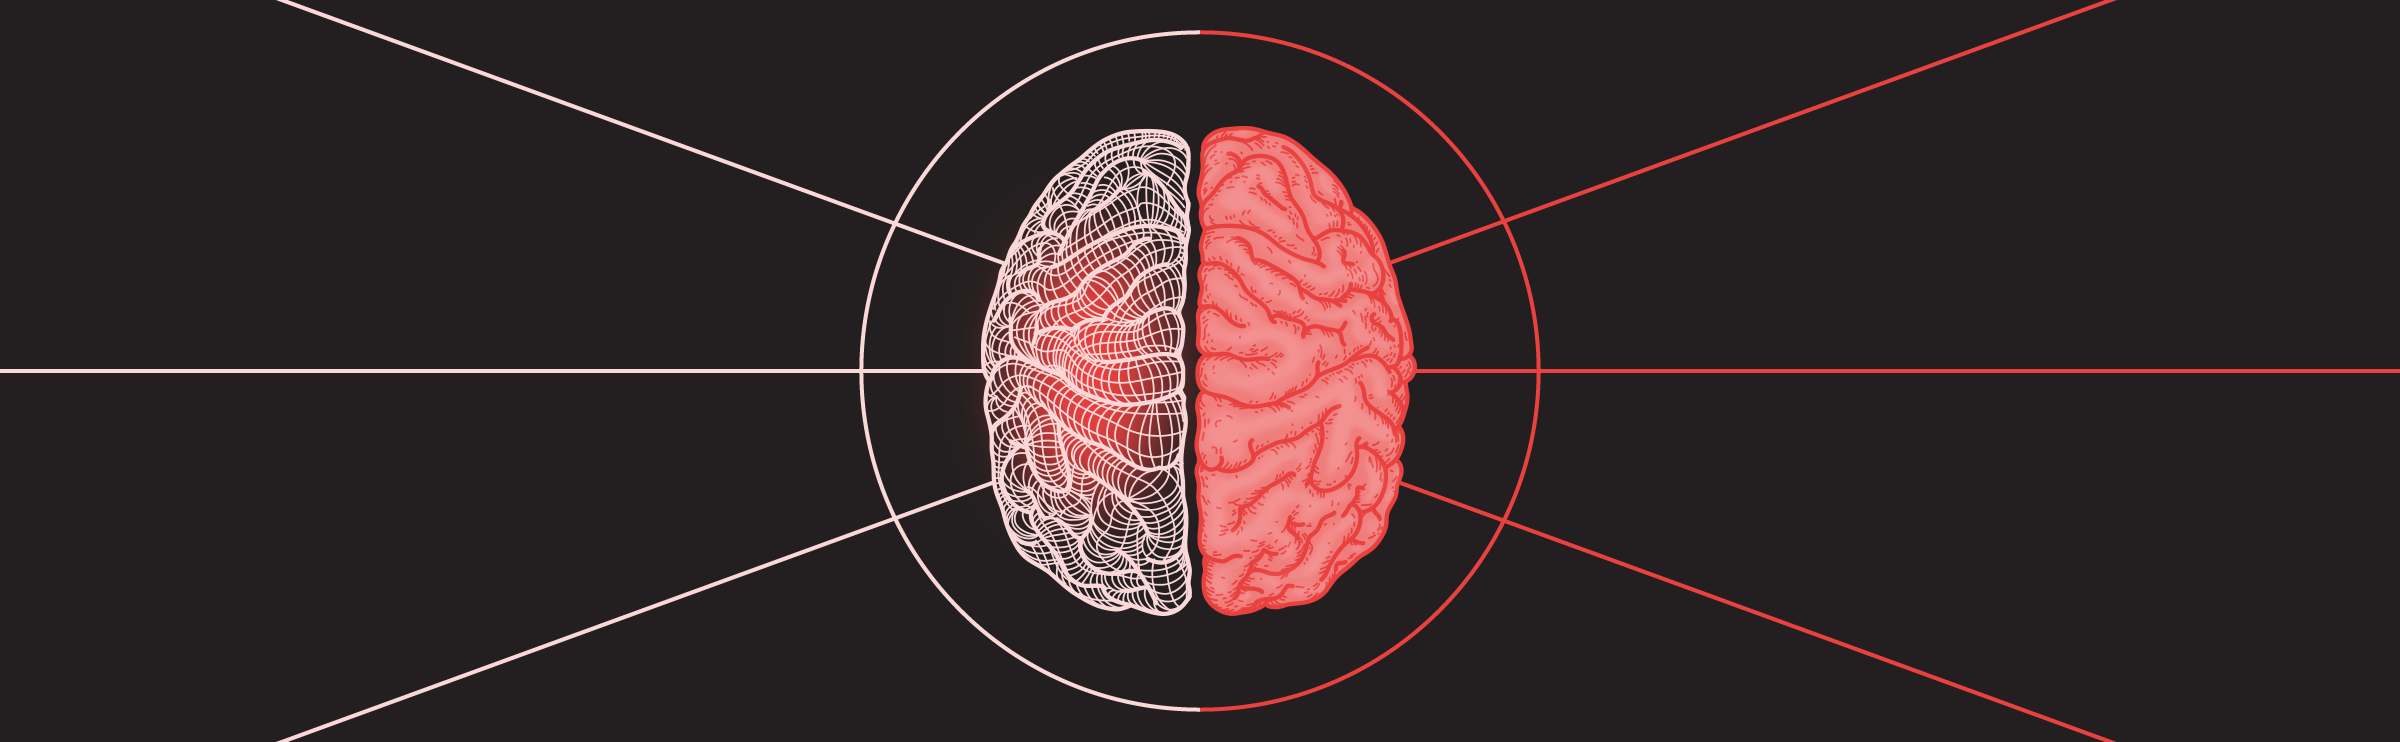 Illustration of AI brain working with human brain